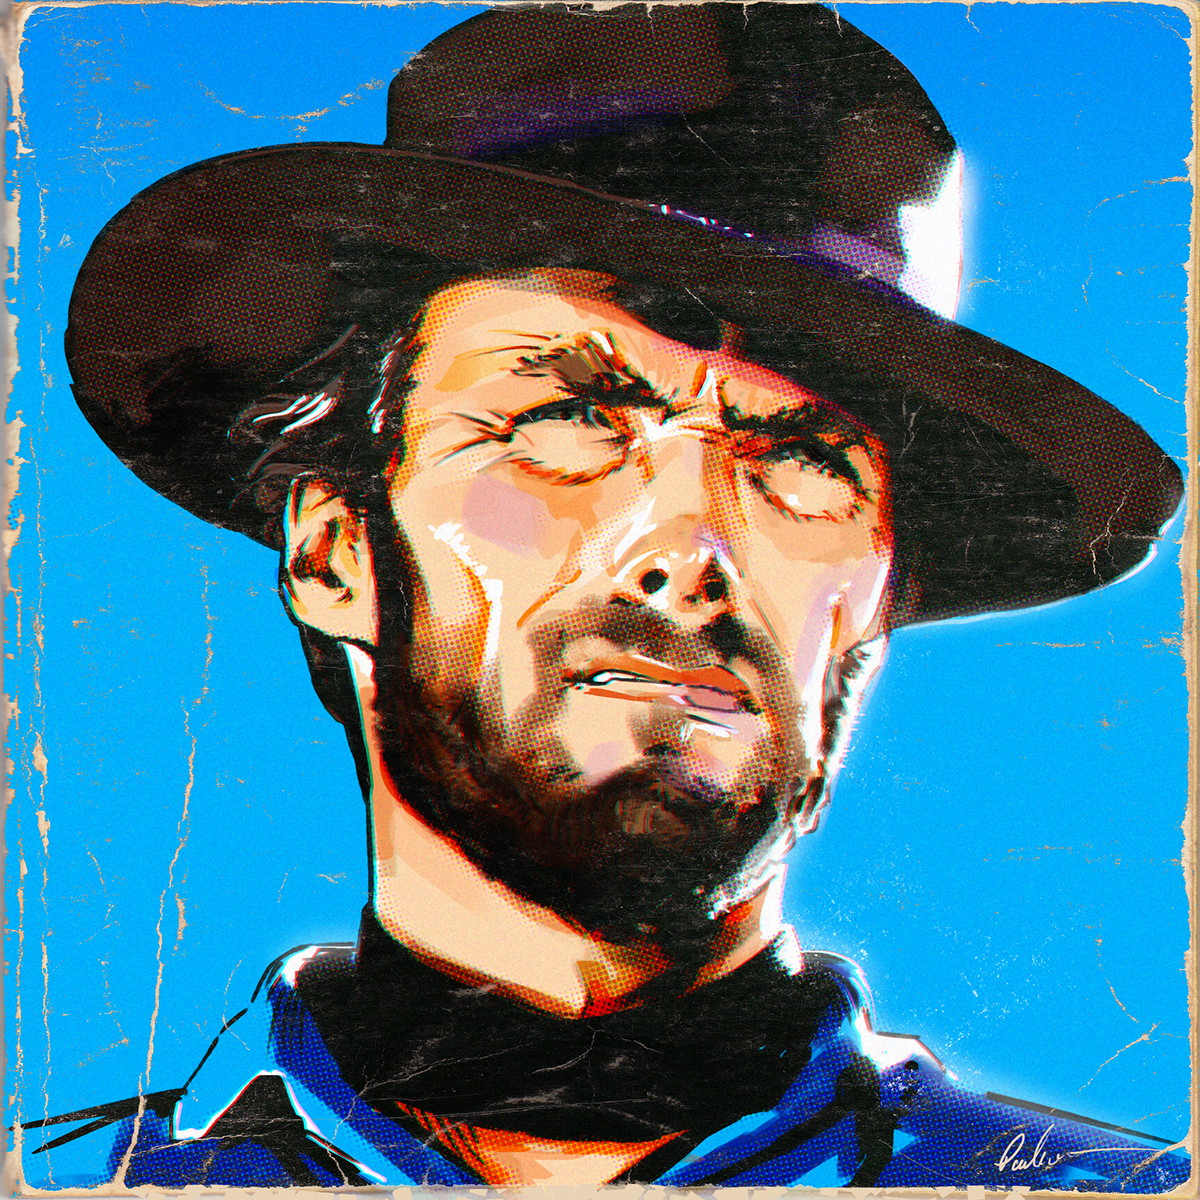 Ковбой клинт. Клинт Иствуд. Clint Eastwood Cowboy. Клинт Иствуд стрелок. Клинт Иствуд ковбой арт.